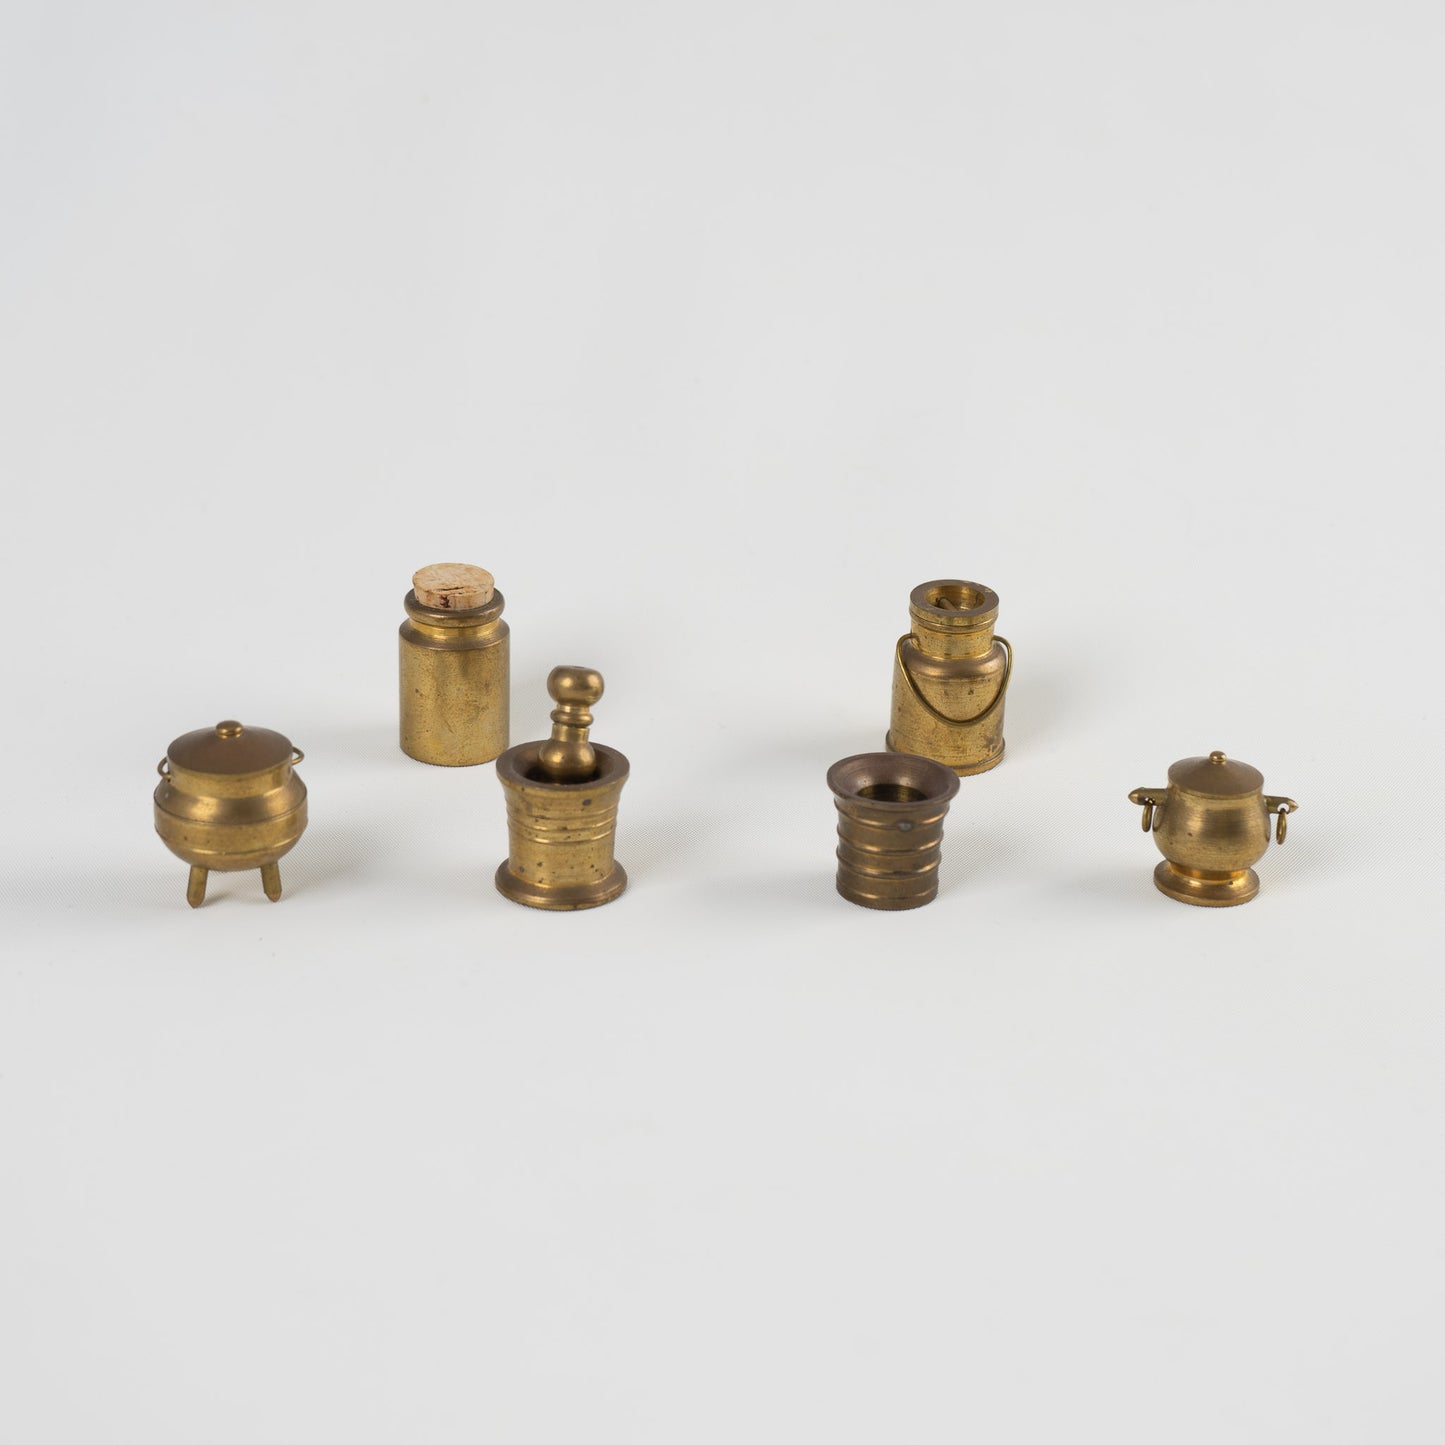 Miniature Brass Figurine, Design #172 – Global1st - Store